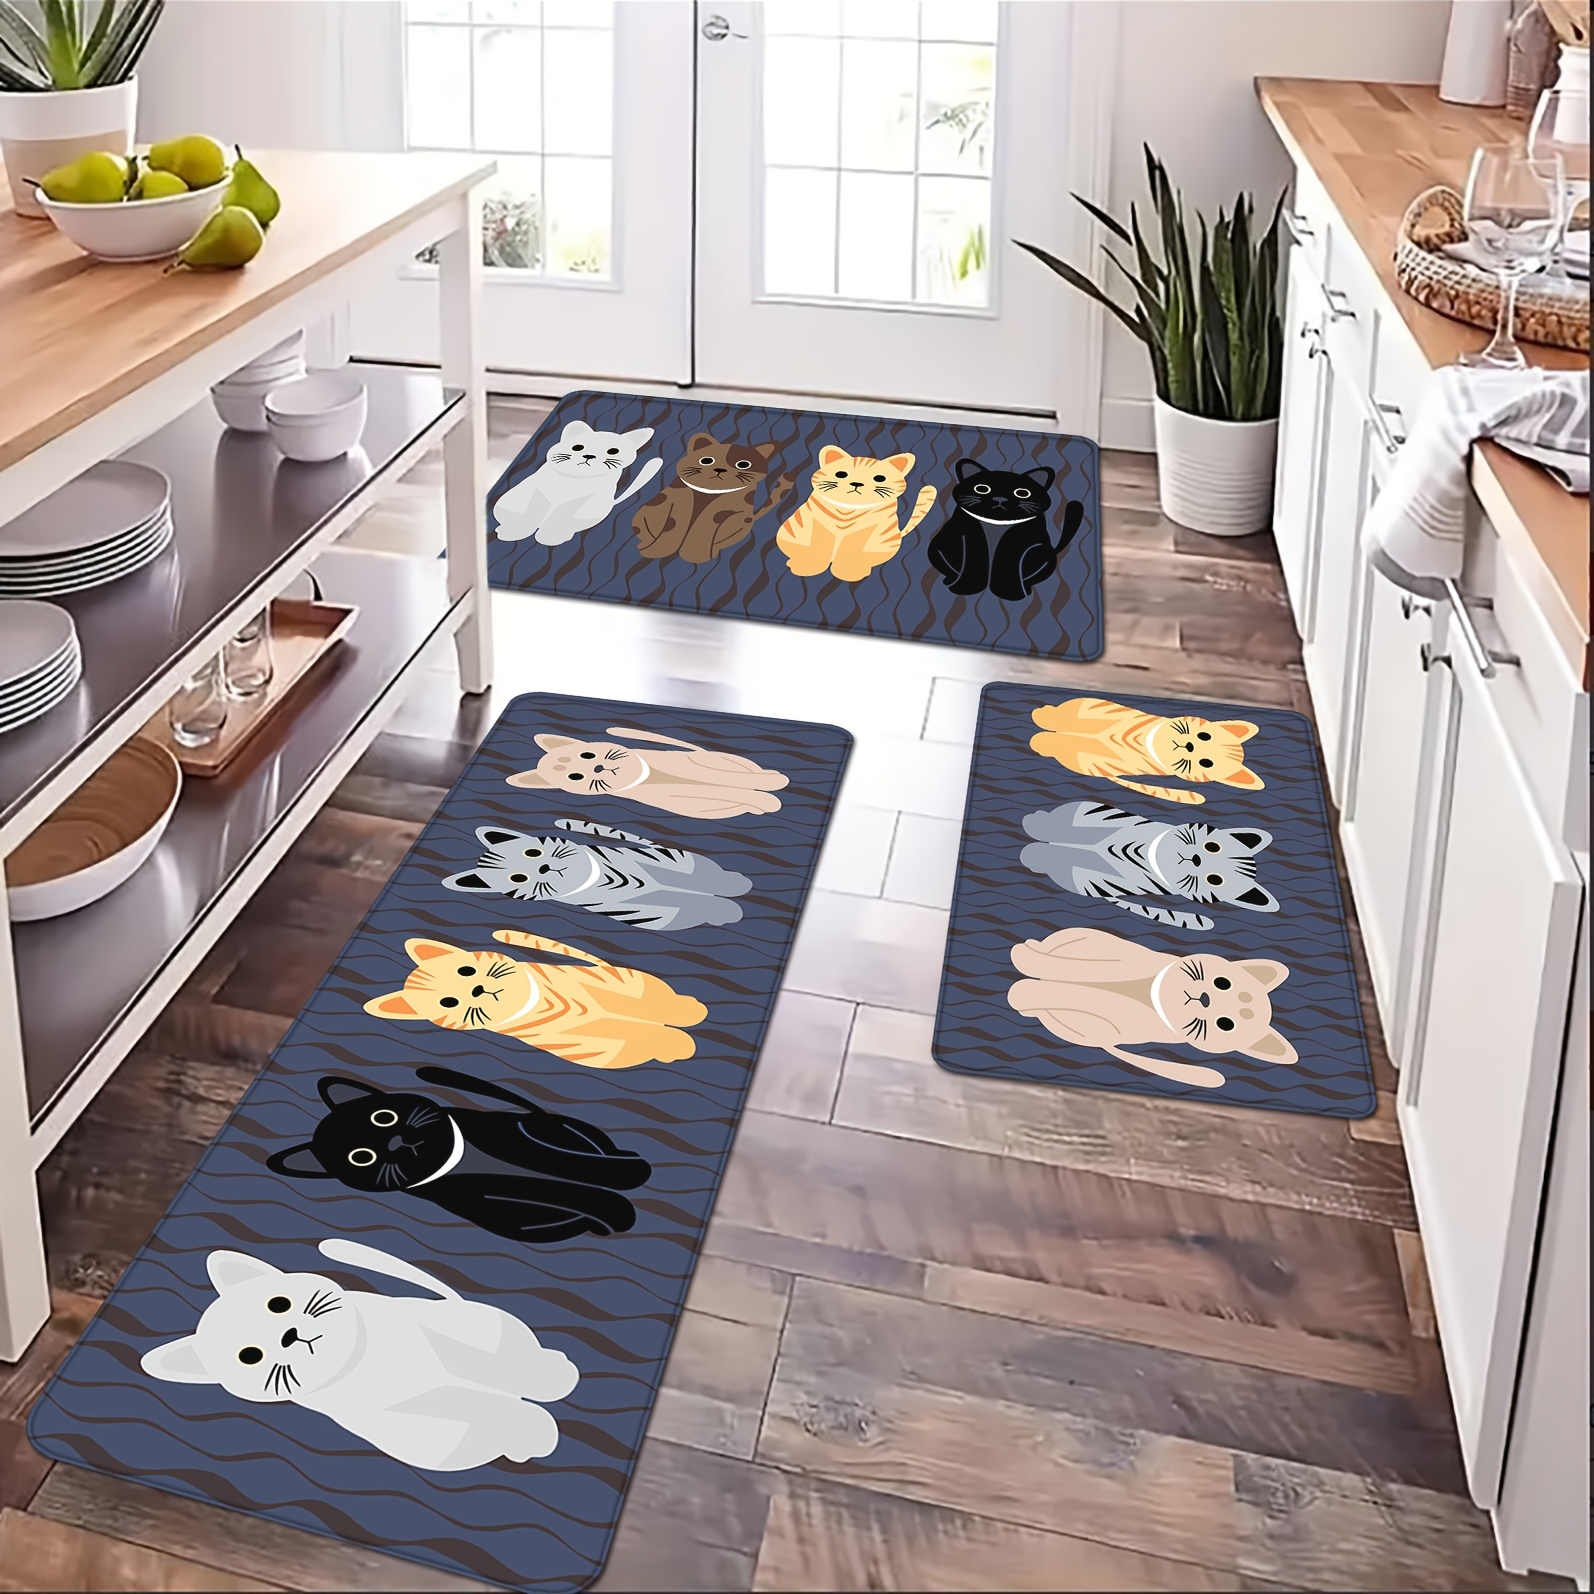 COCO Art Mat, Pet Feeding/play Vinyl Protective Mat, Cat Design, Waterproof Floor  Mat, Vinyl Area Rug, Home Ideas, Bathroom, Kitchen 